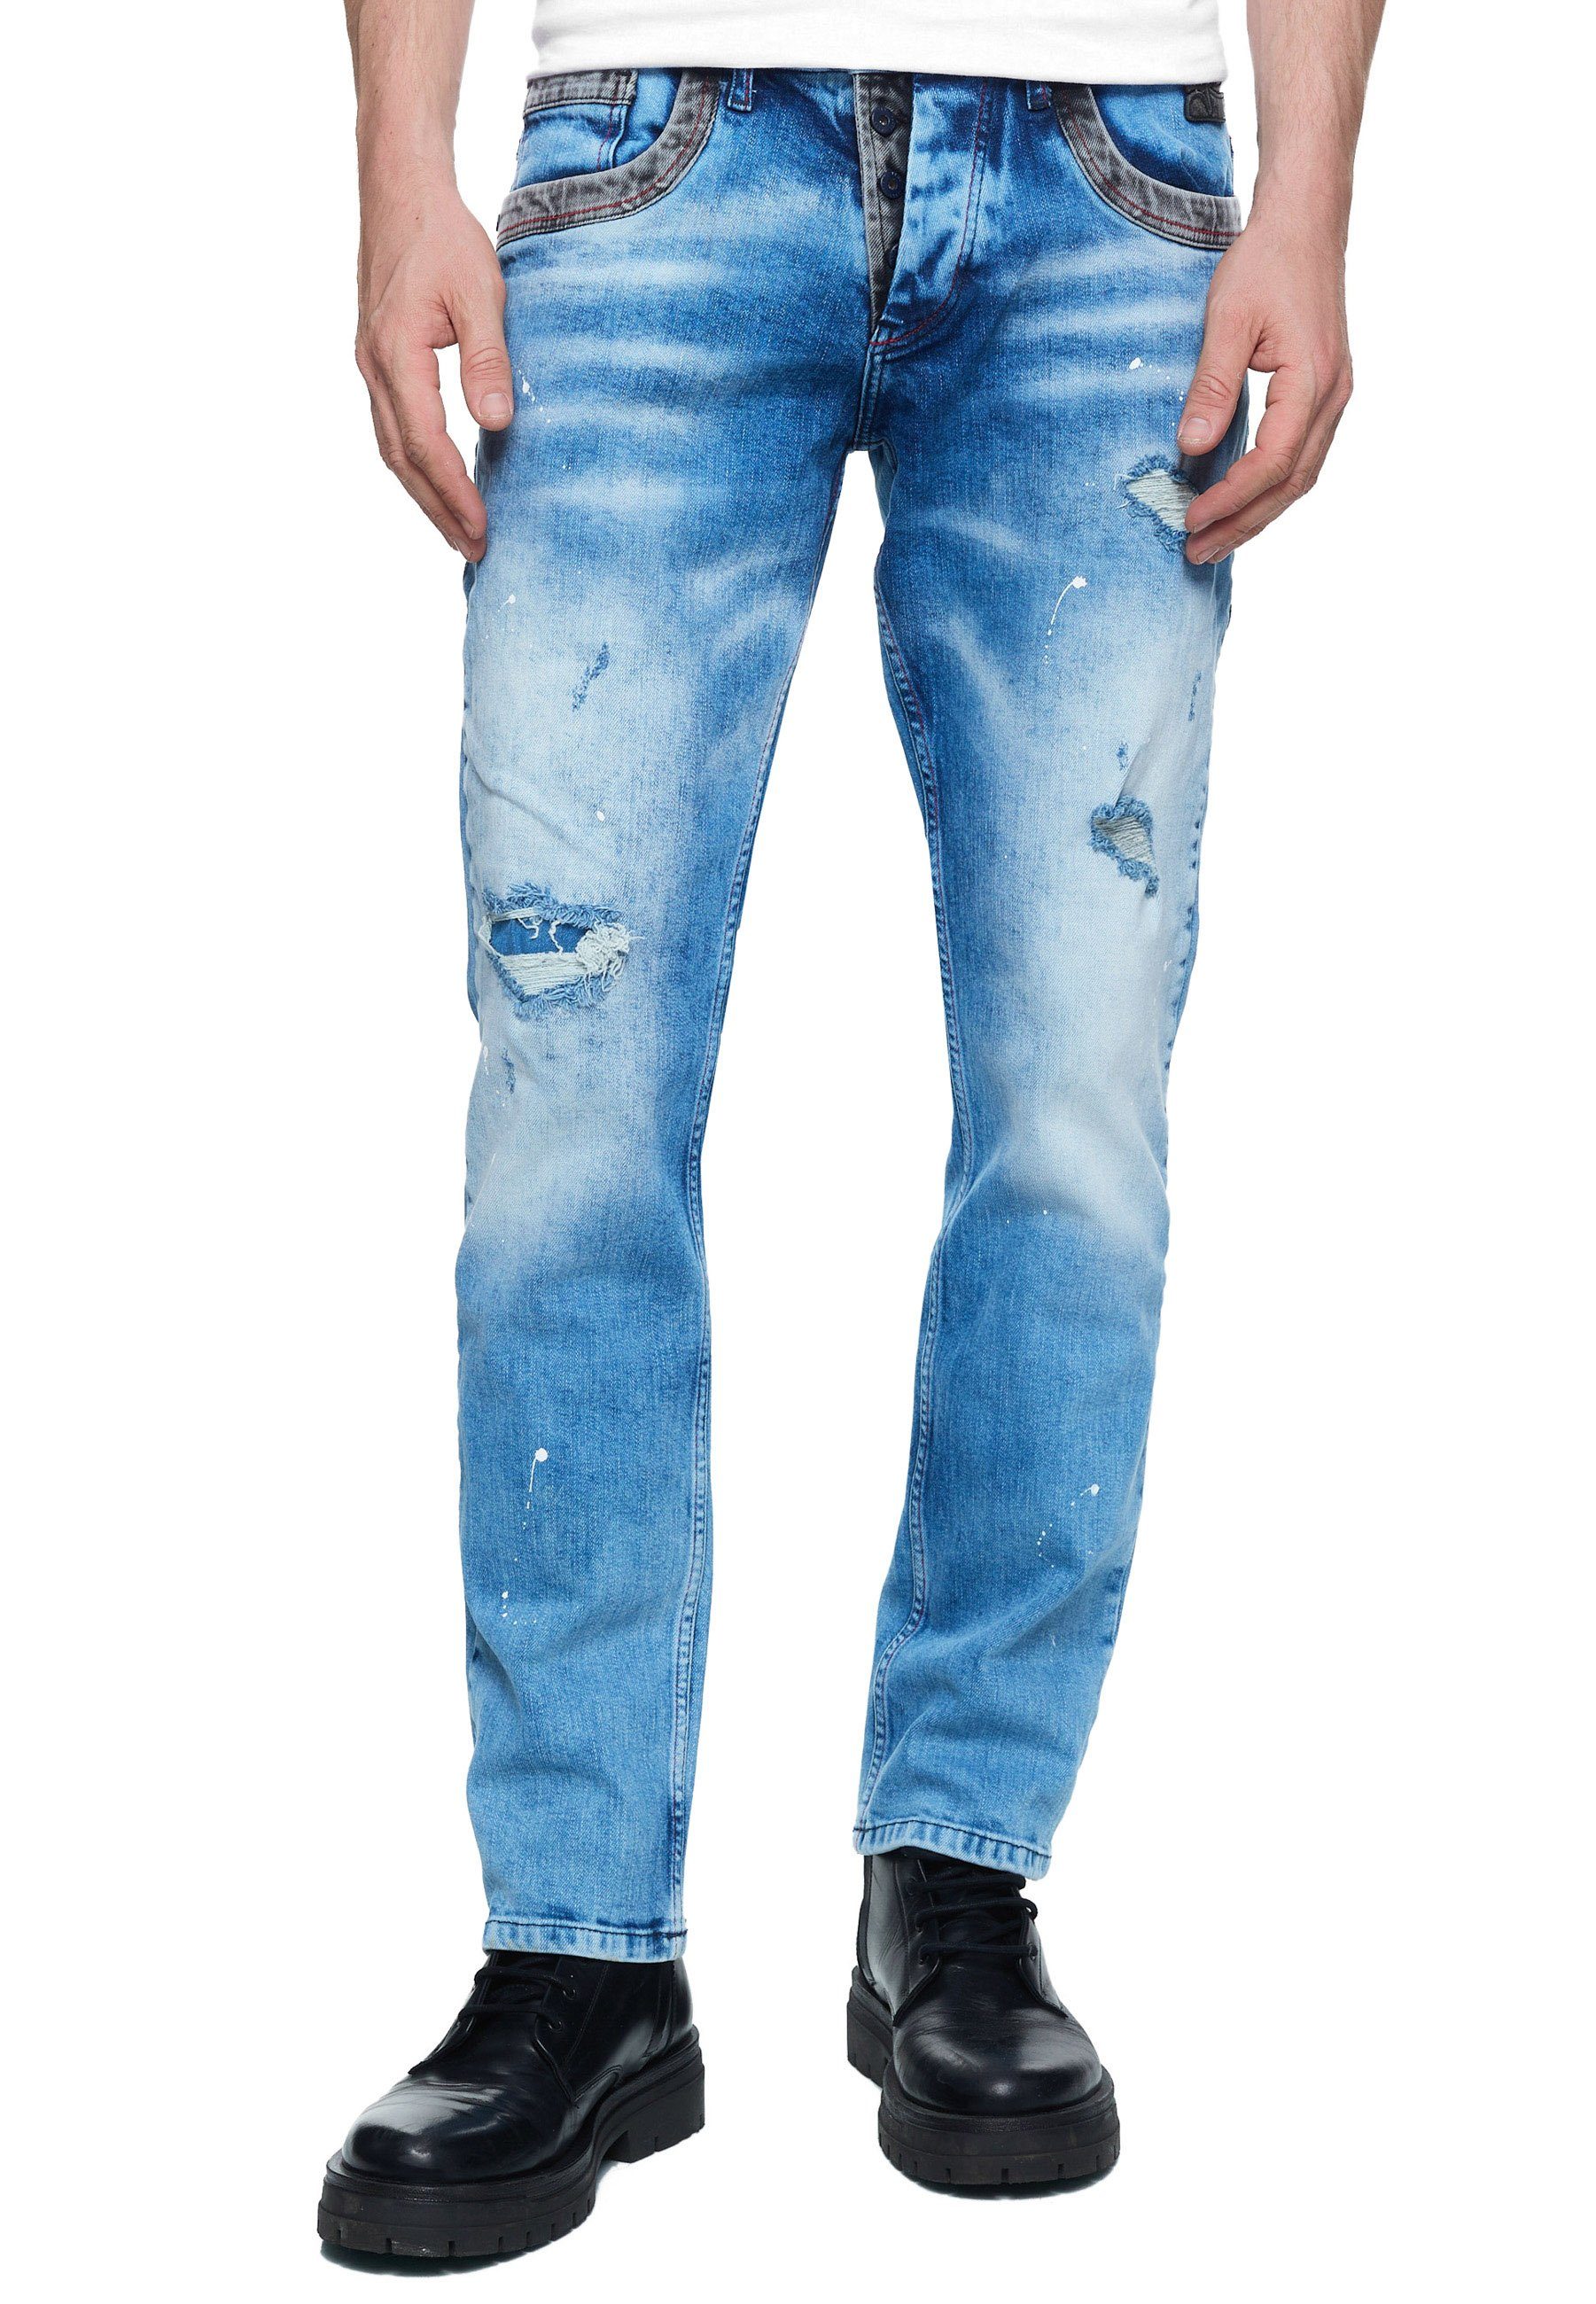 Rusty Neal Straight-Jeans YOKOTE mit farblich abgesetzten Details hellblau